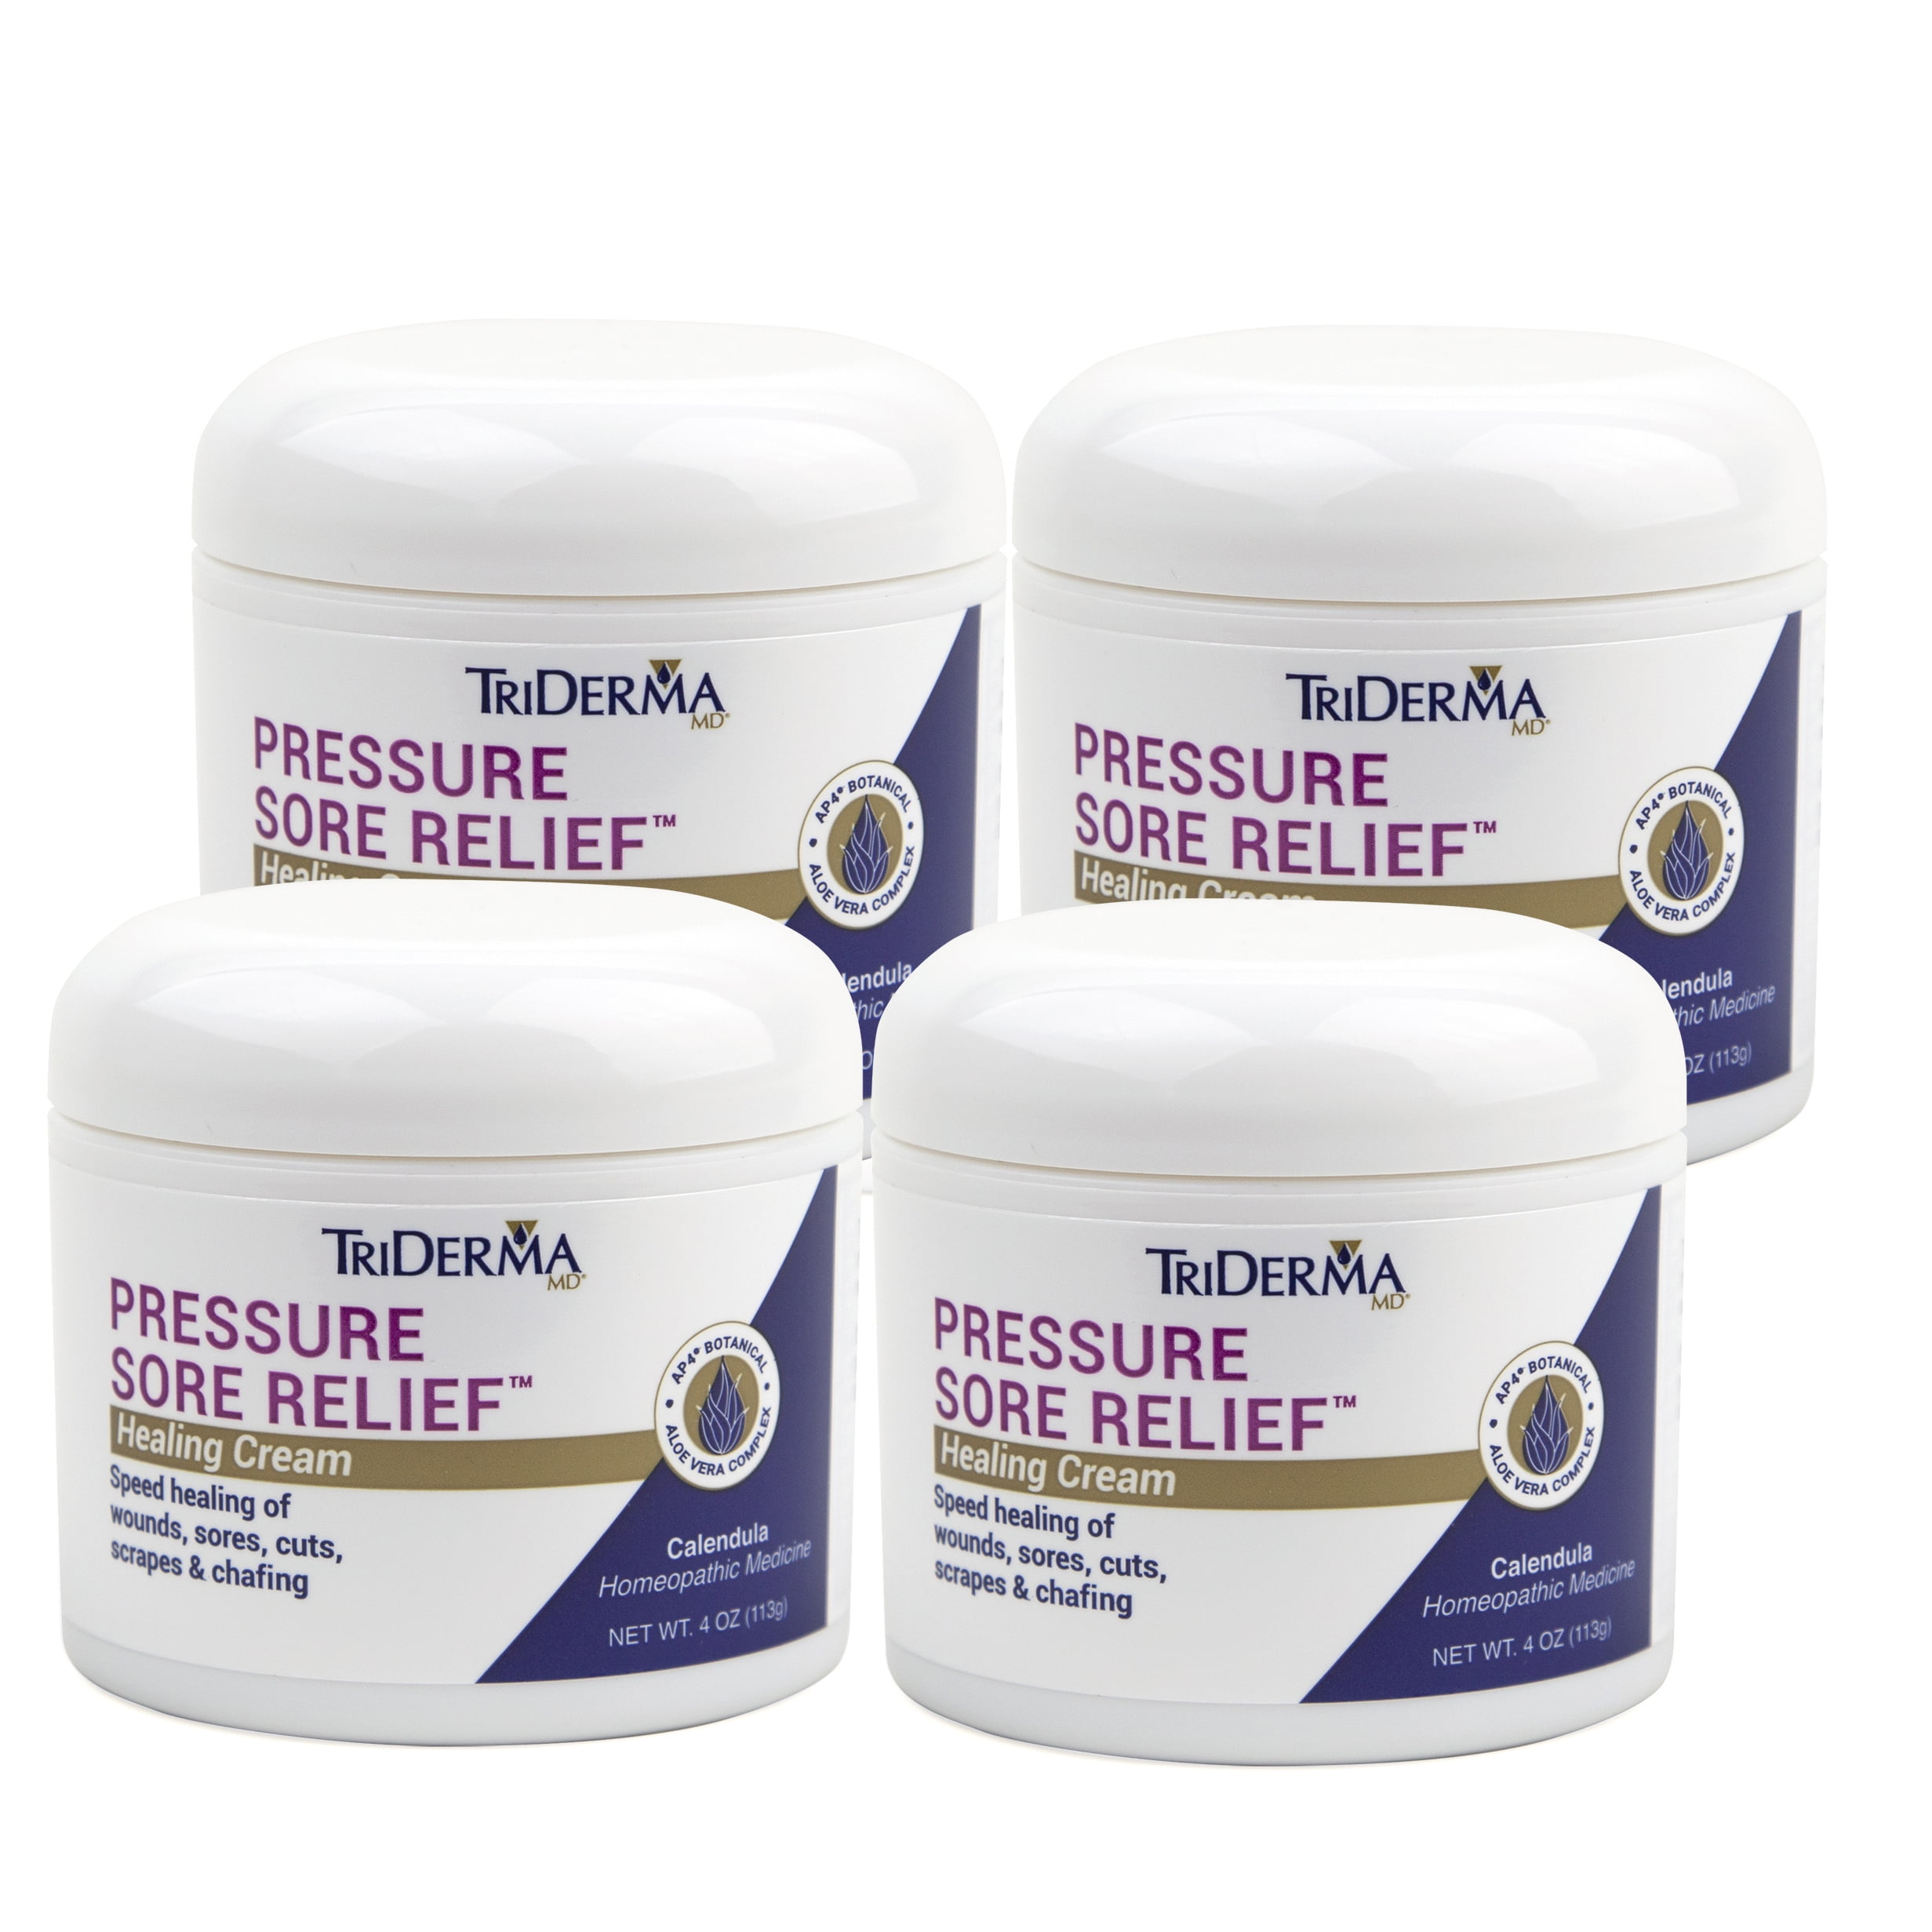 TRIDERMA Pressure Sore Relief Healing Cream